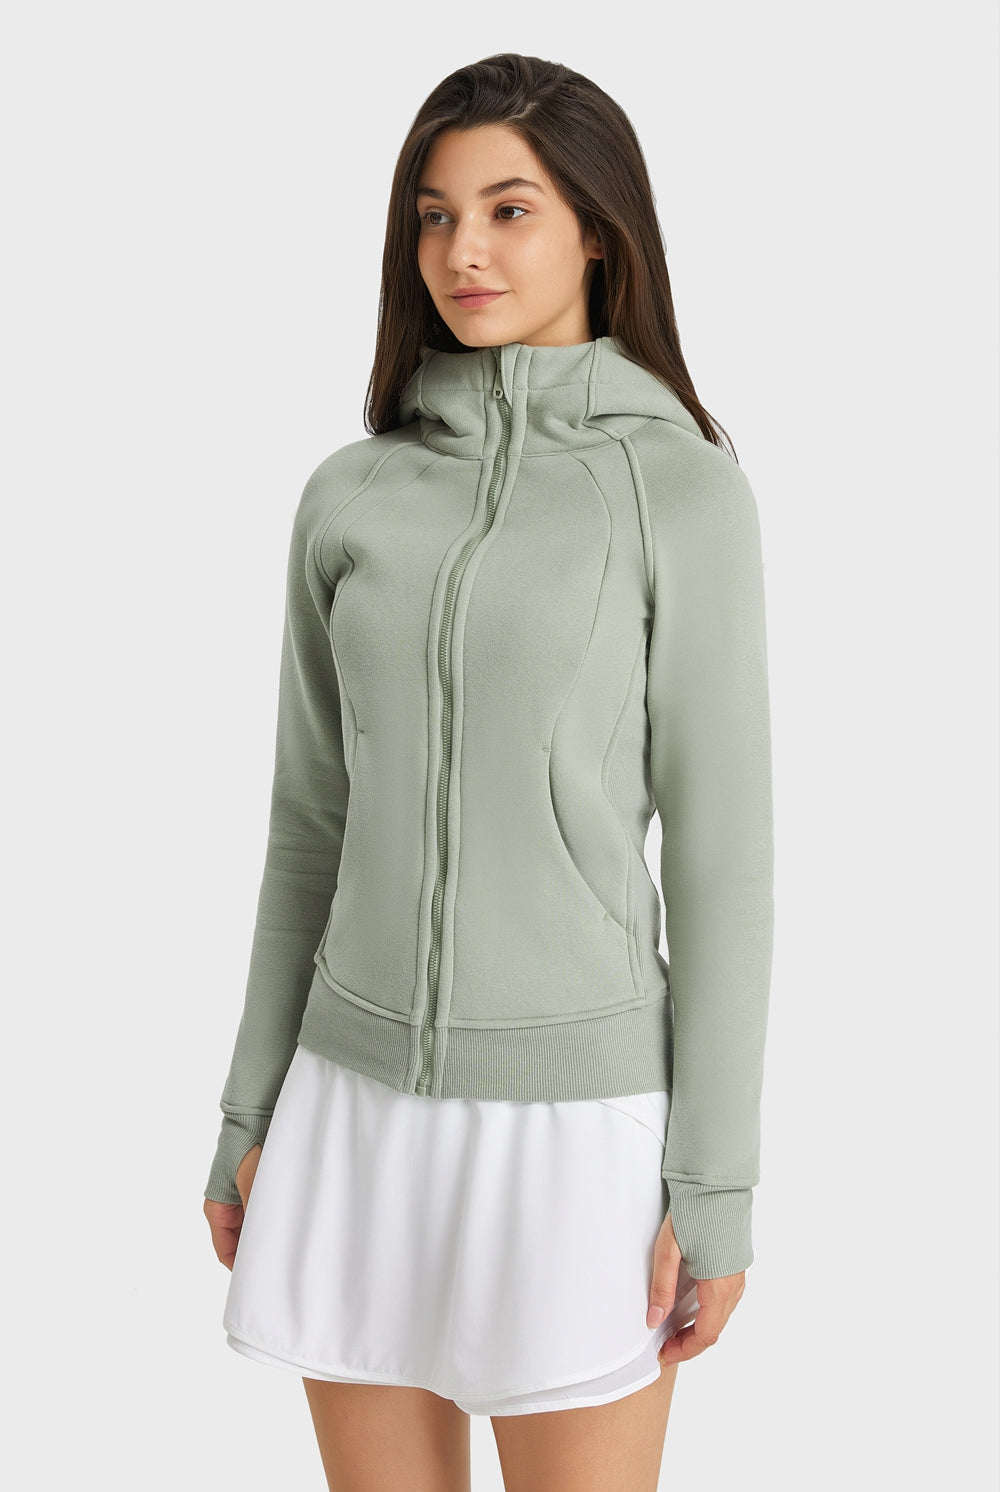 Light Gray Progress Not Perfection Zip Up Seam Detail Hooded Sports Jacket activewear